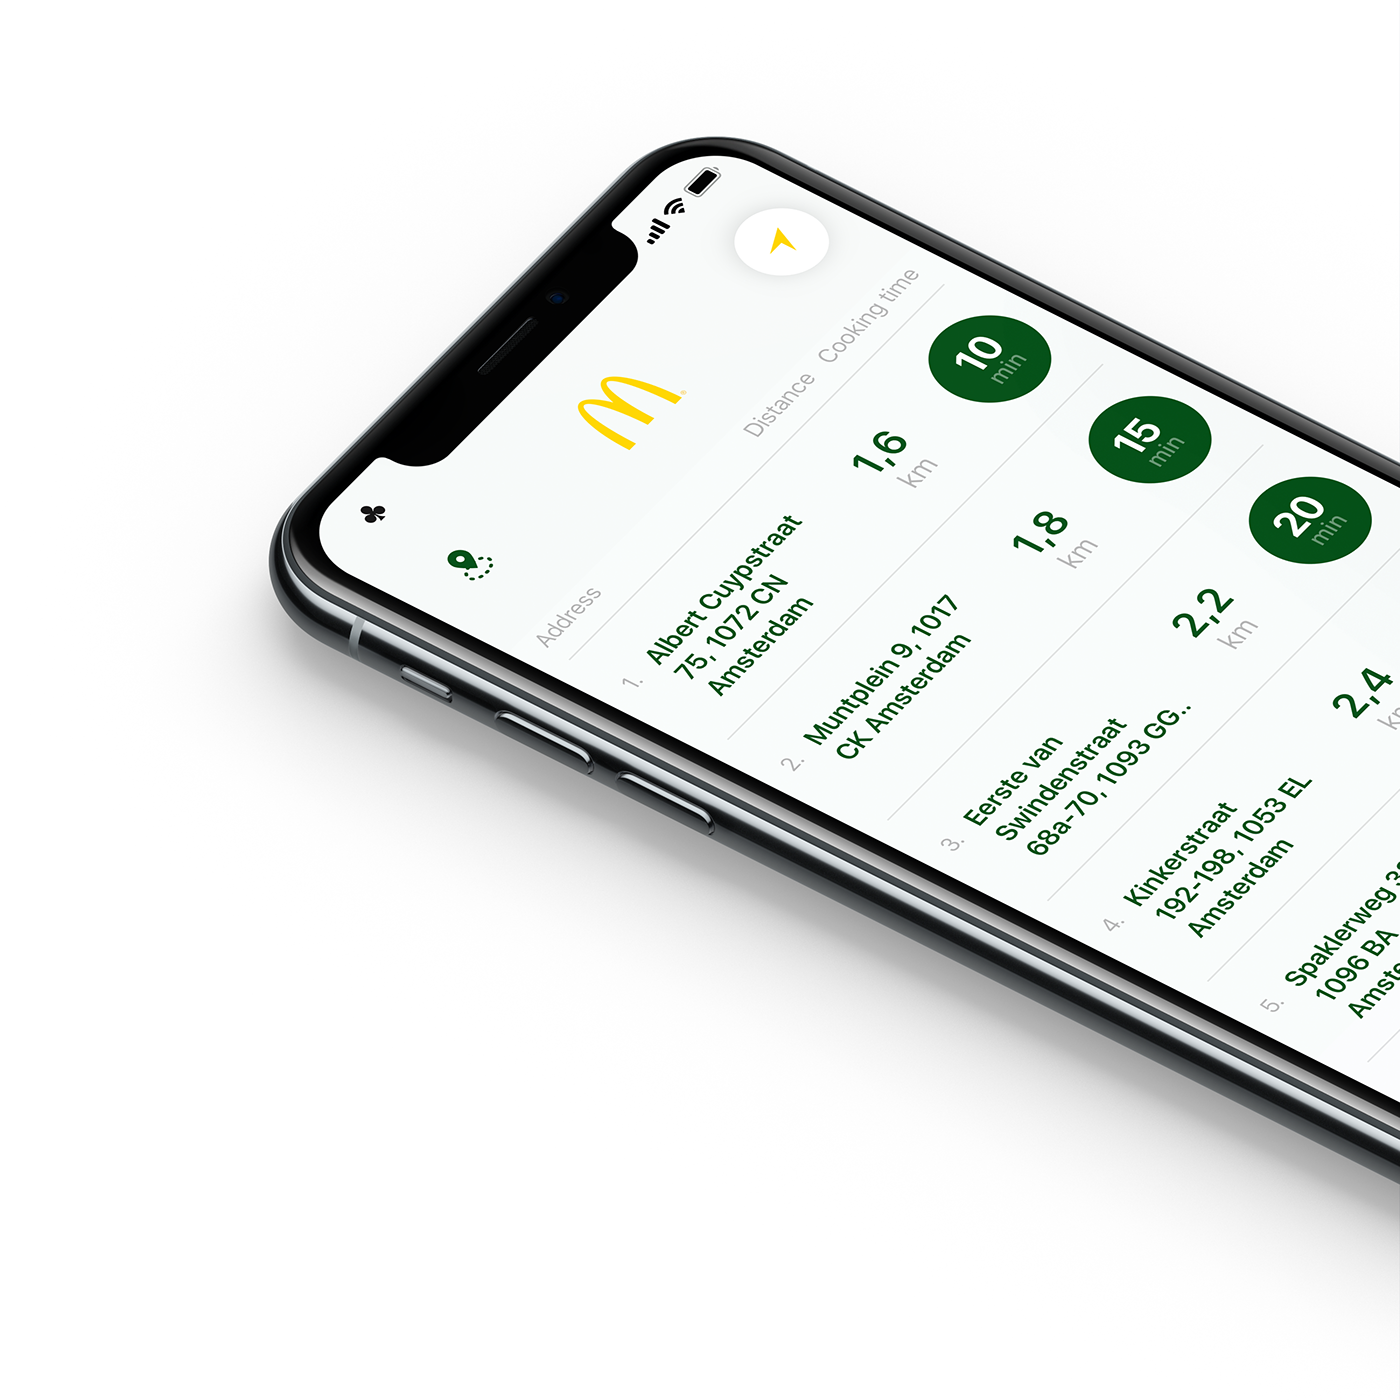 app concept UI ux mockups iPhone x modern clean minimal